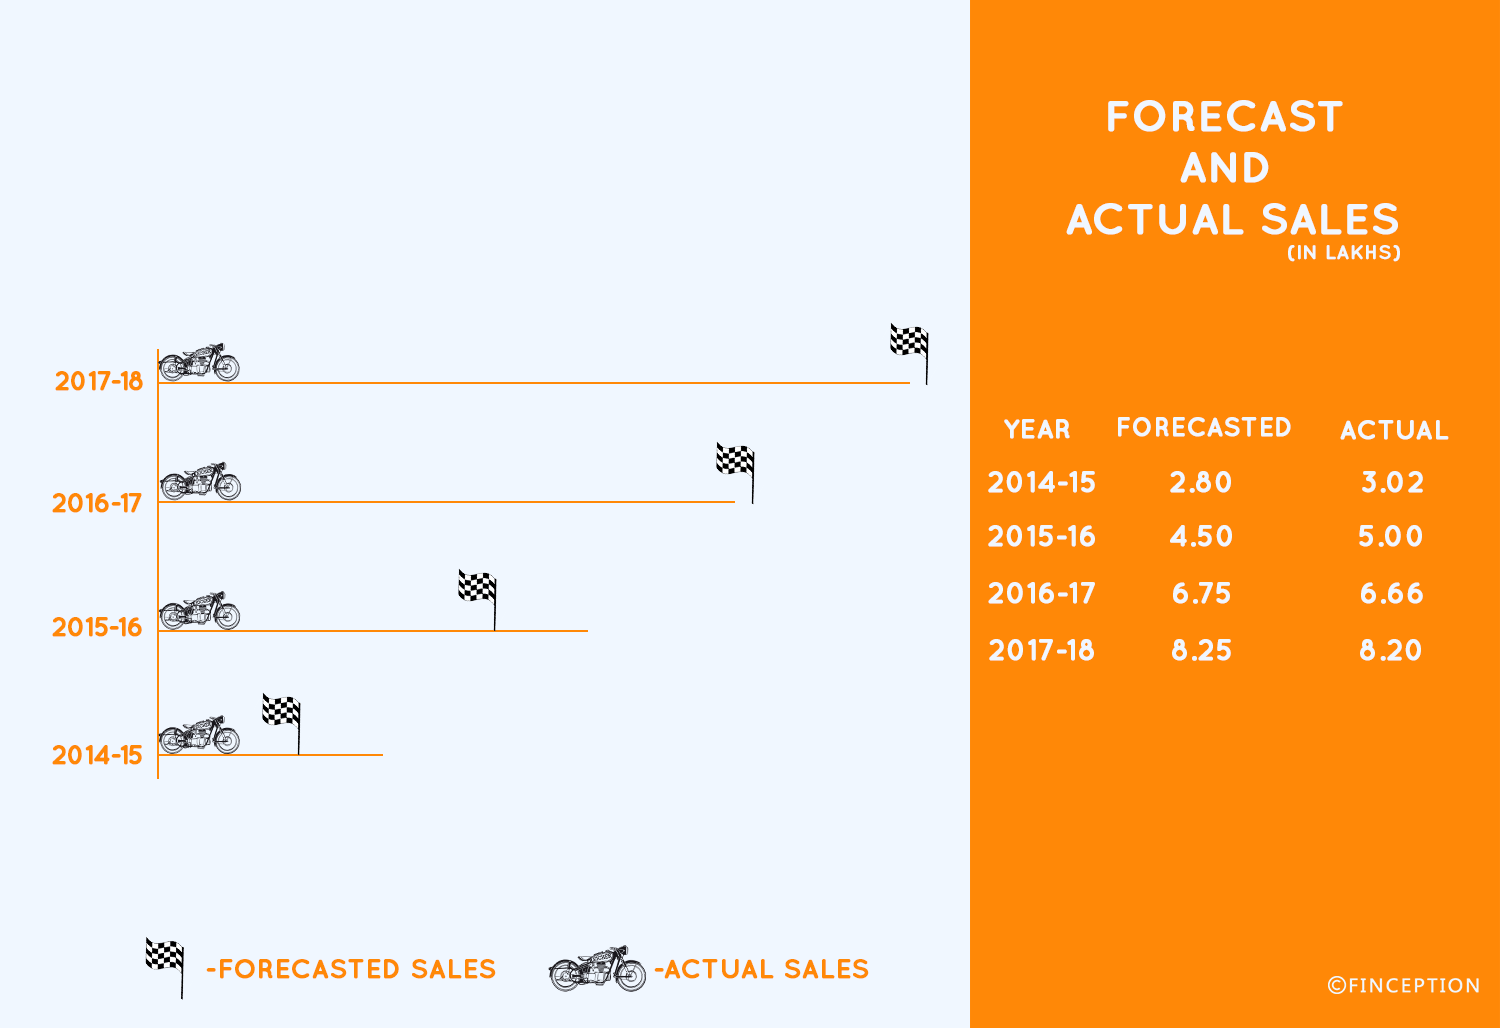 Eicher Bikes forecast vs actual sales